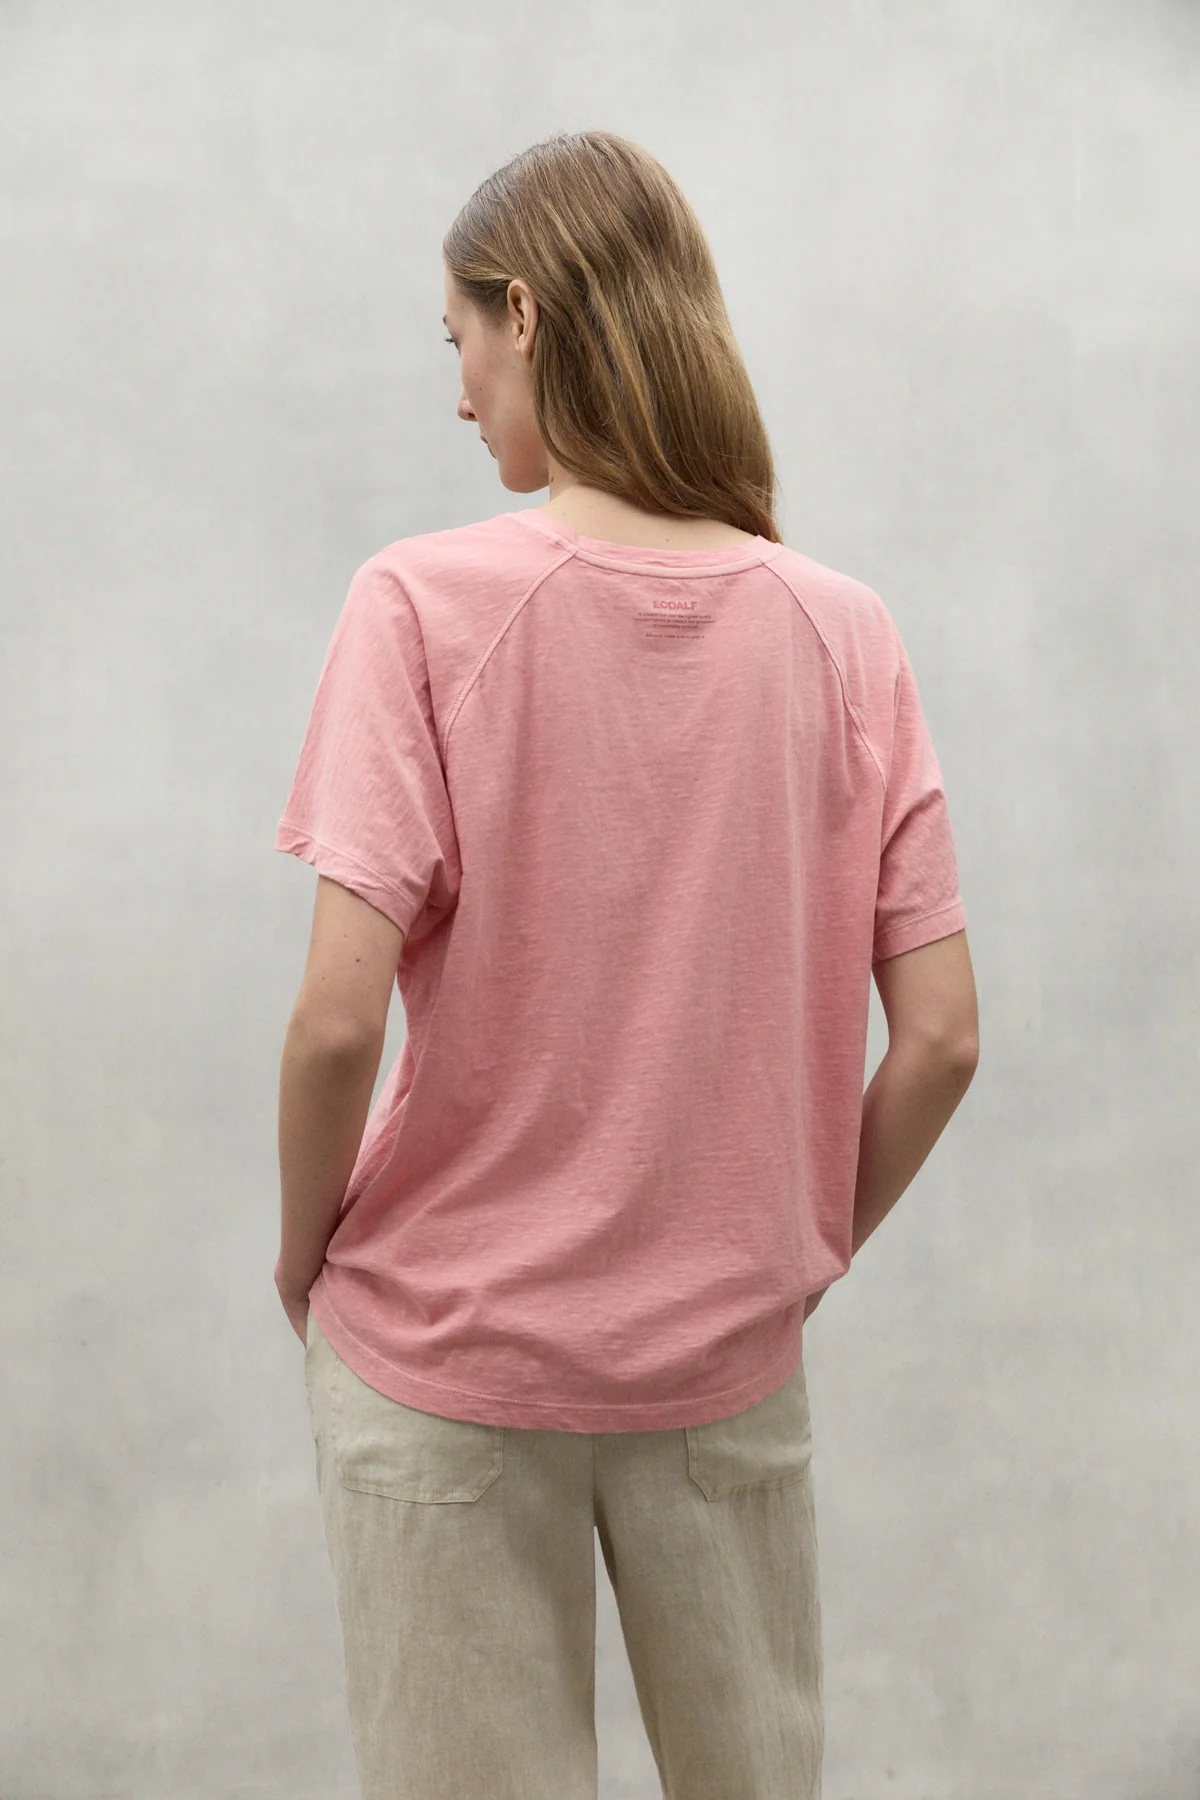 ECOALF camiseta manga corta color rosa "because" - 3